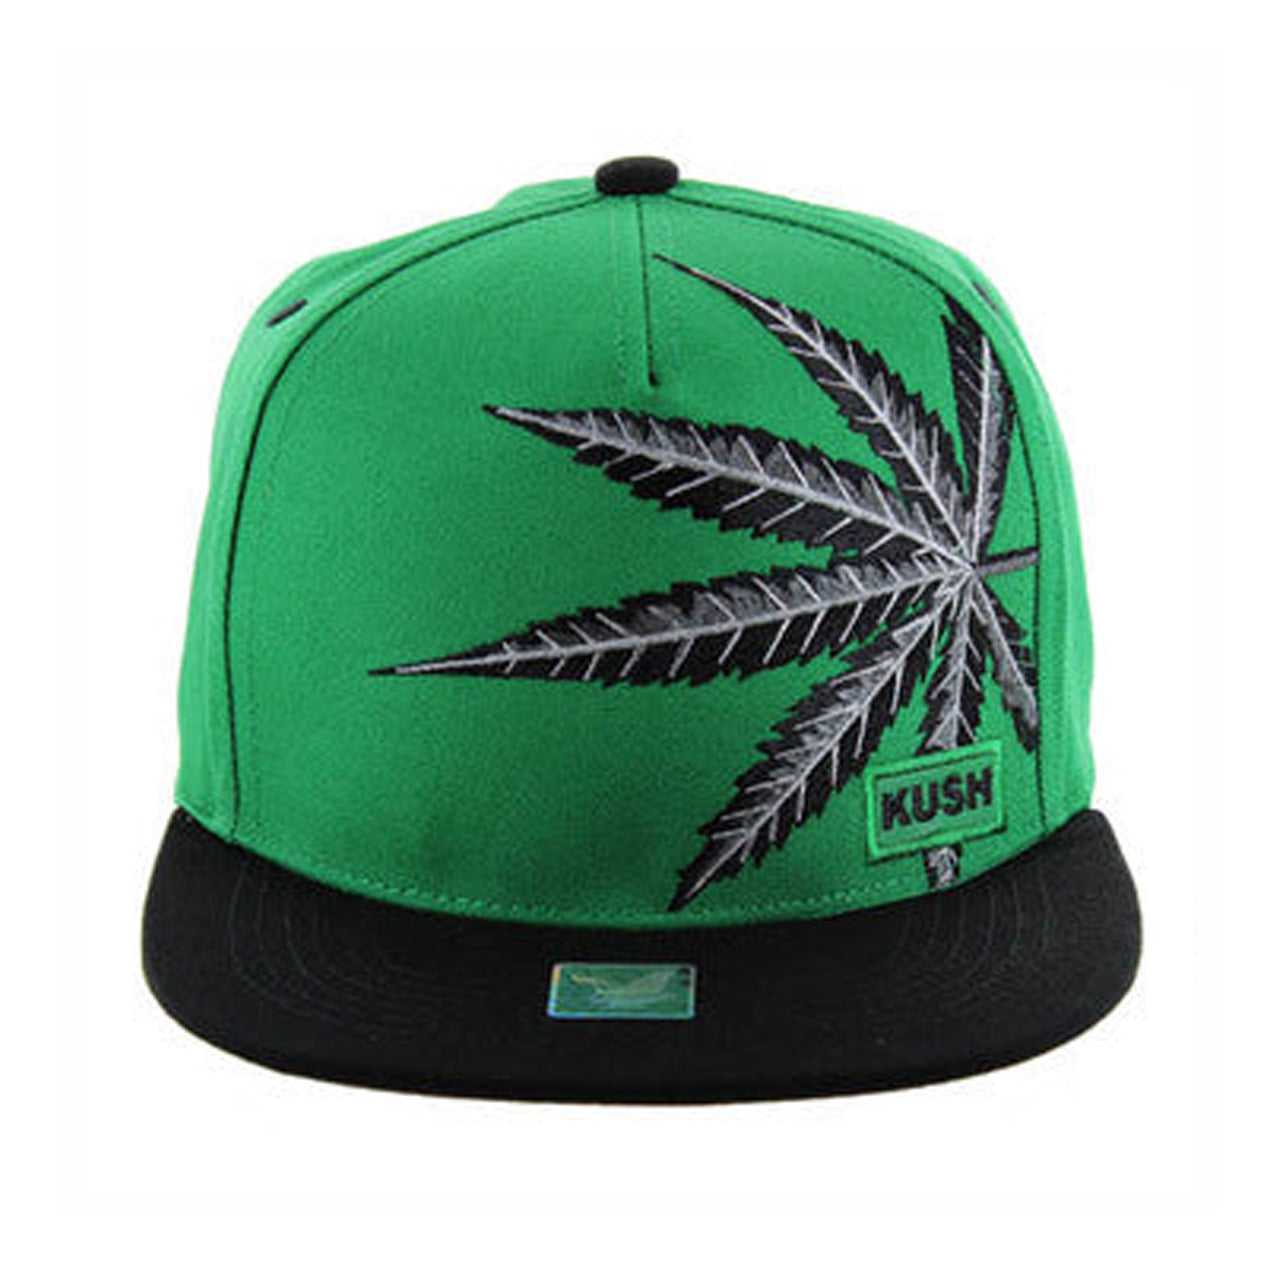 SM818 Marijuana Snapback Hat - Green & Black (Pack of 12)